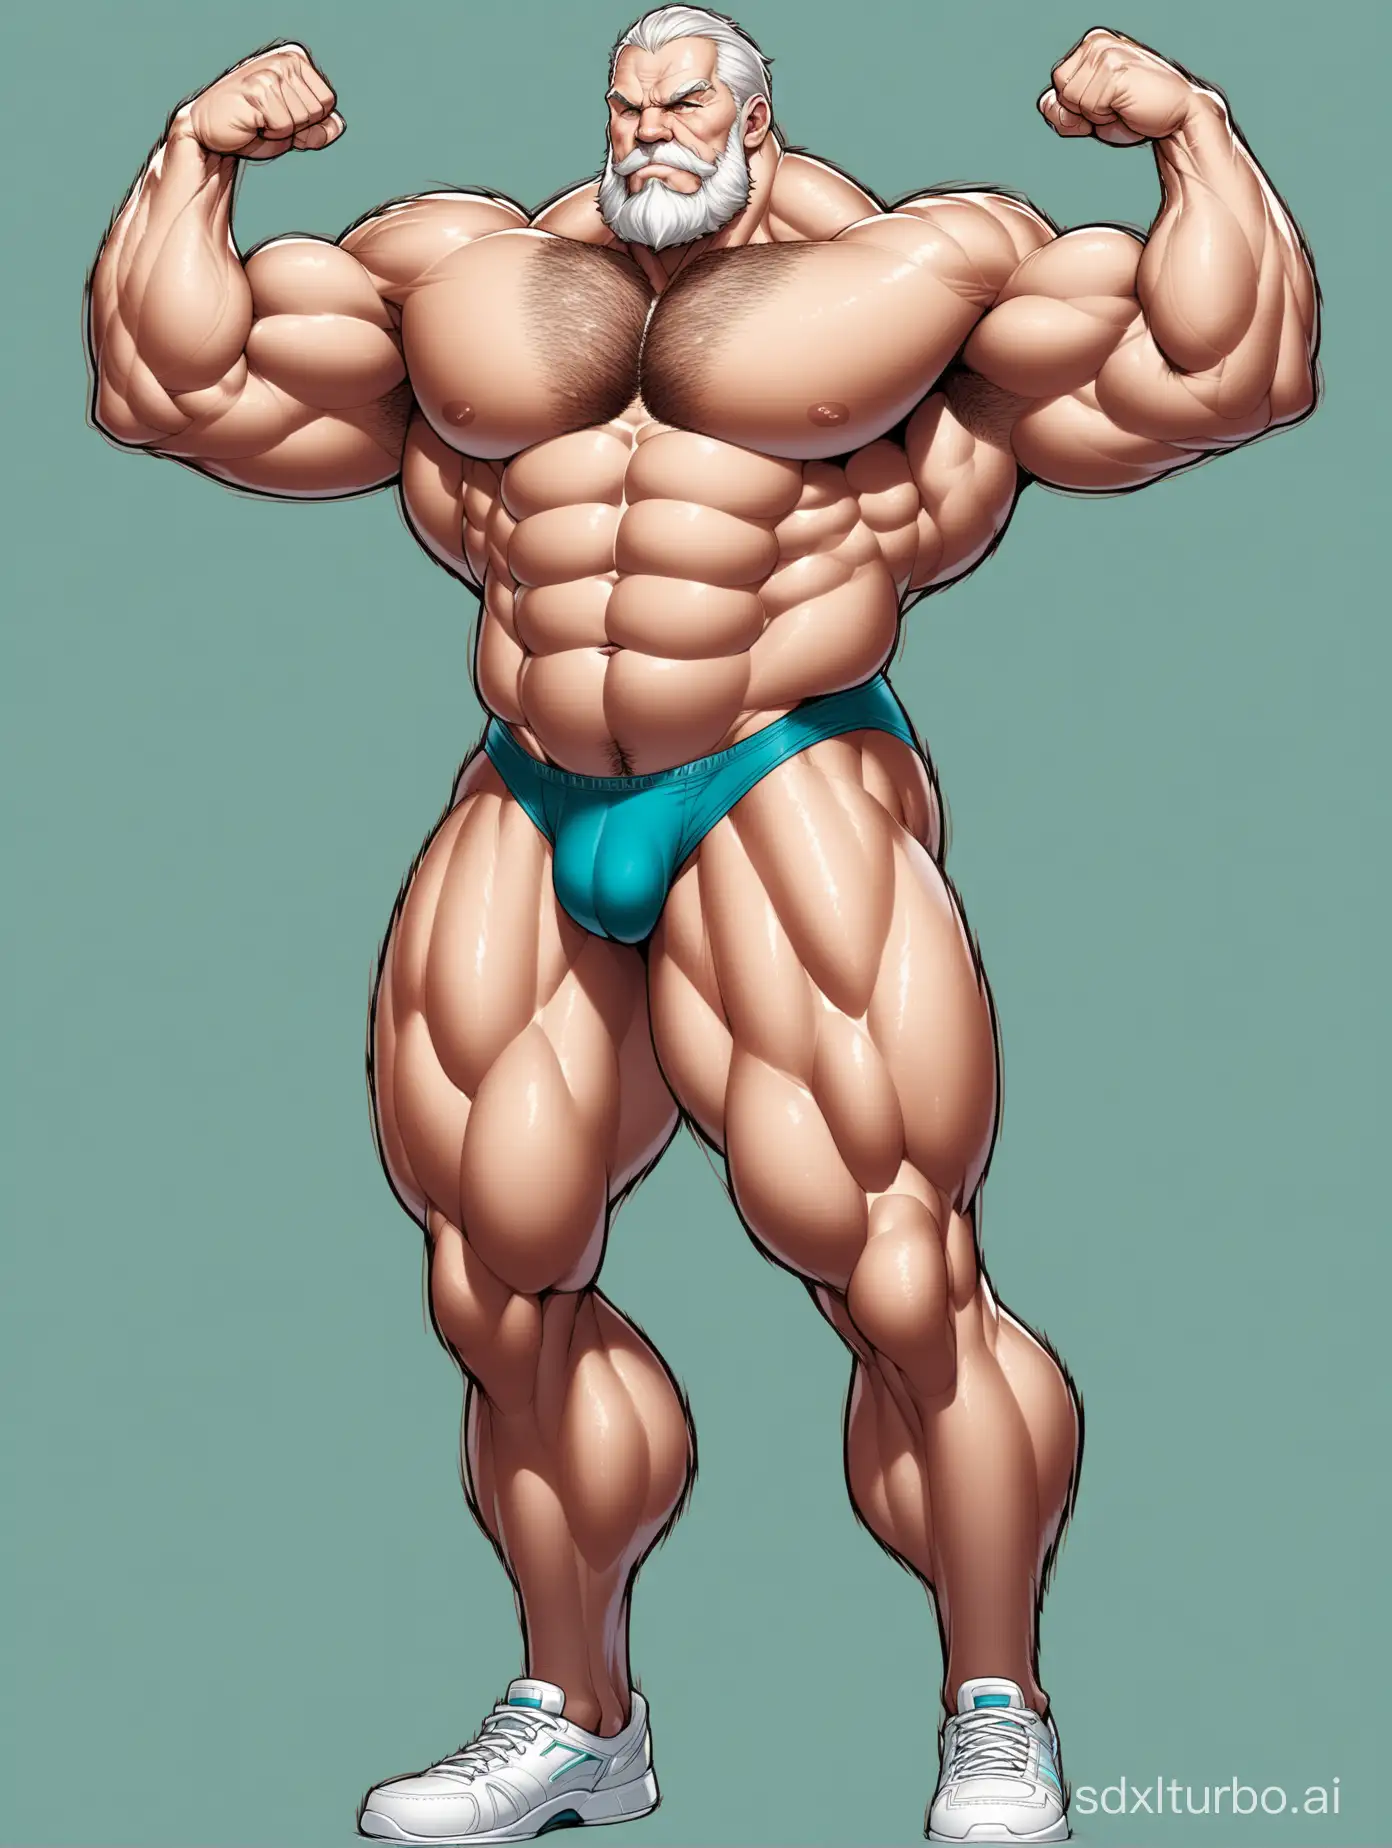 Massive-Muscle-Stud-Showing-Giant-Biceps-in-Underwear